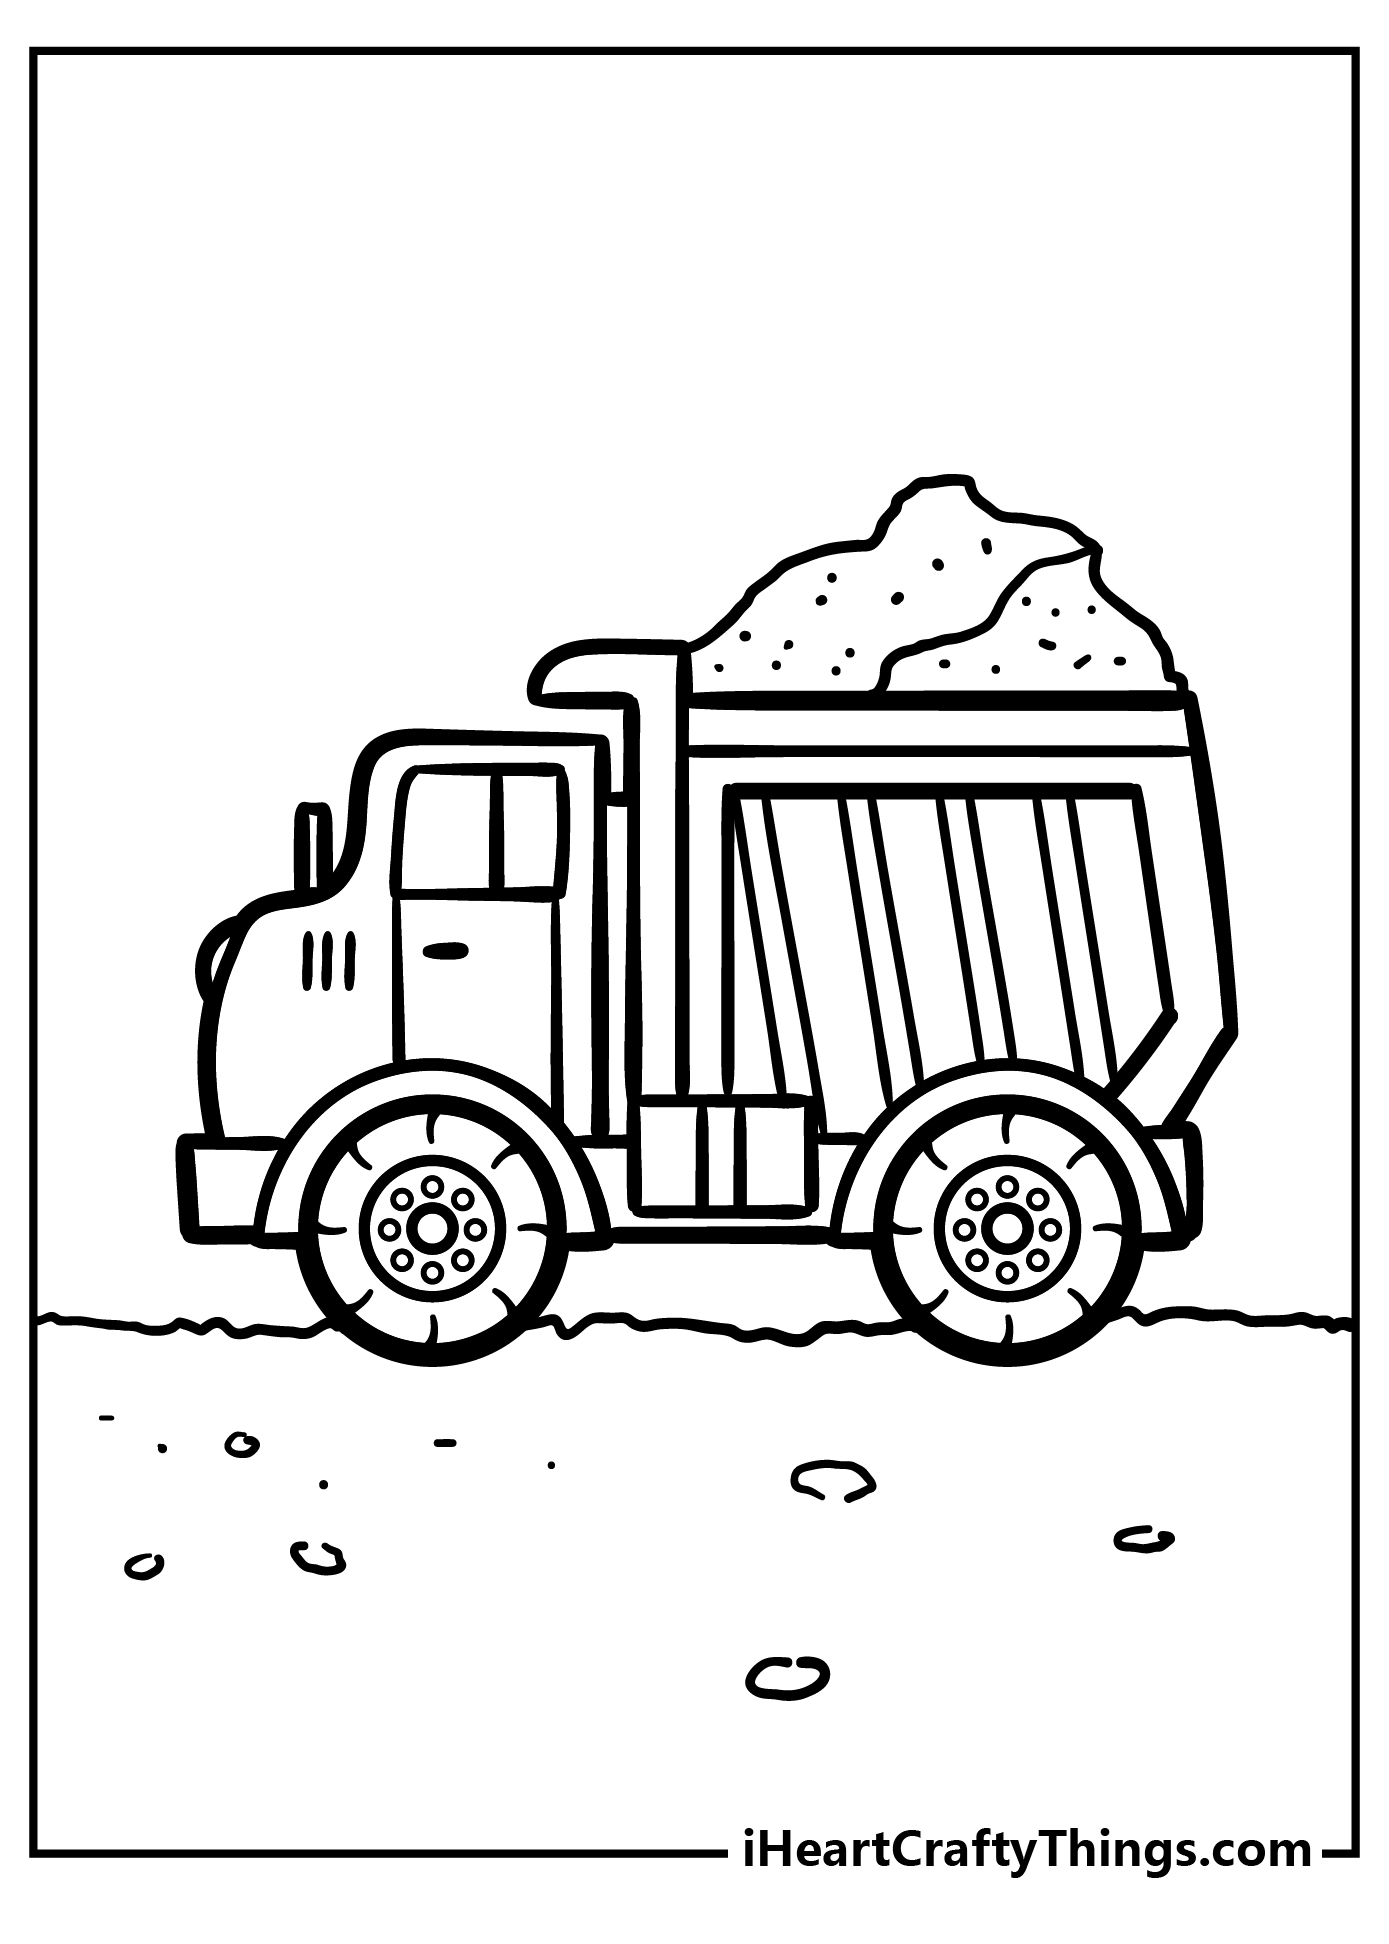 Dump Truck Coloring Sheet for children free download